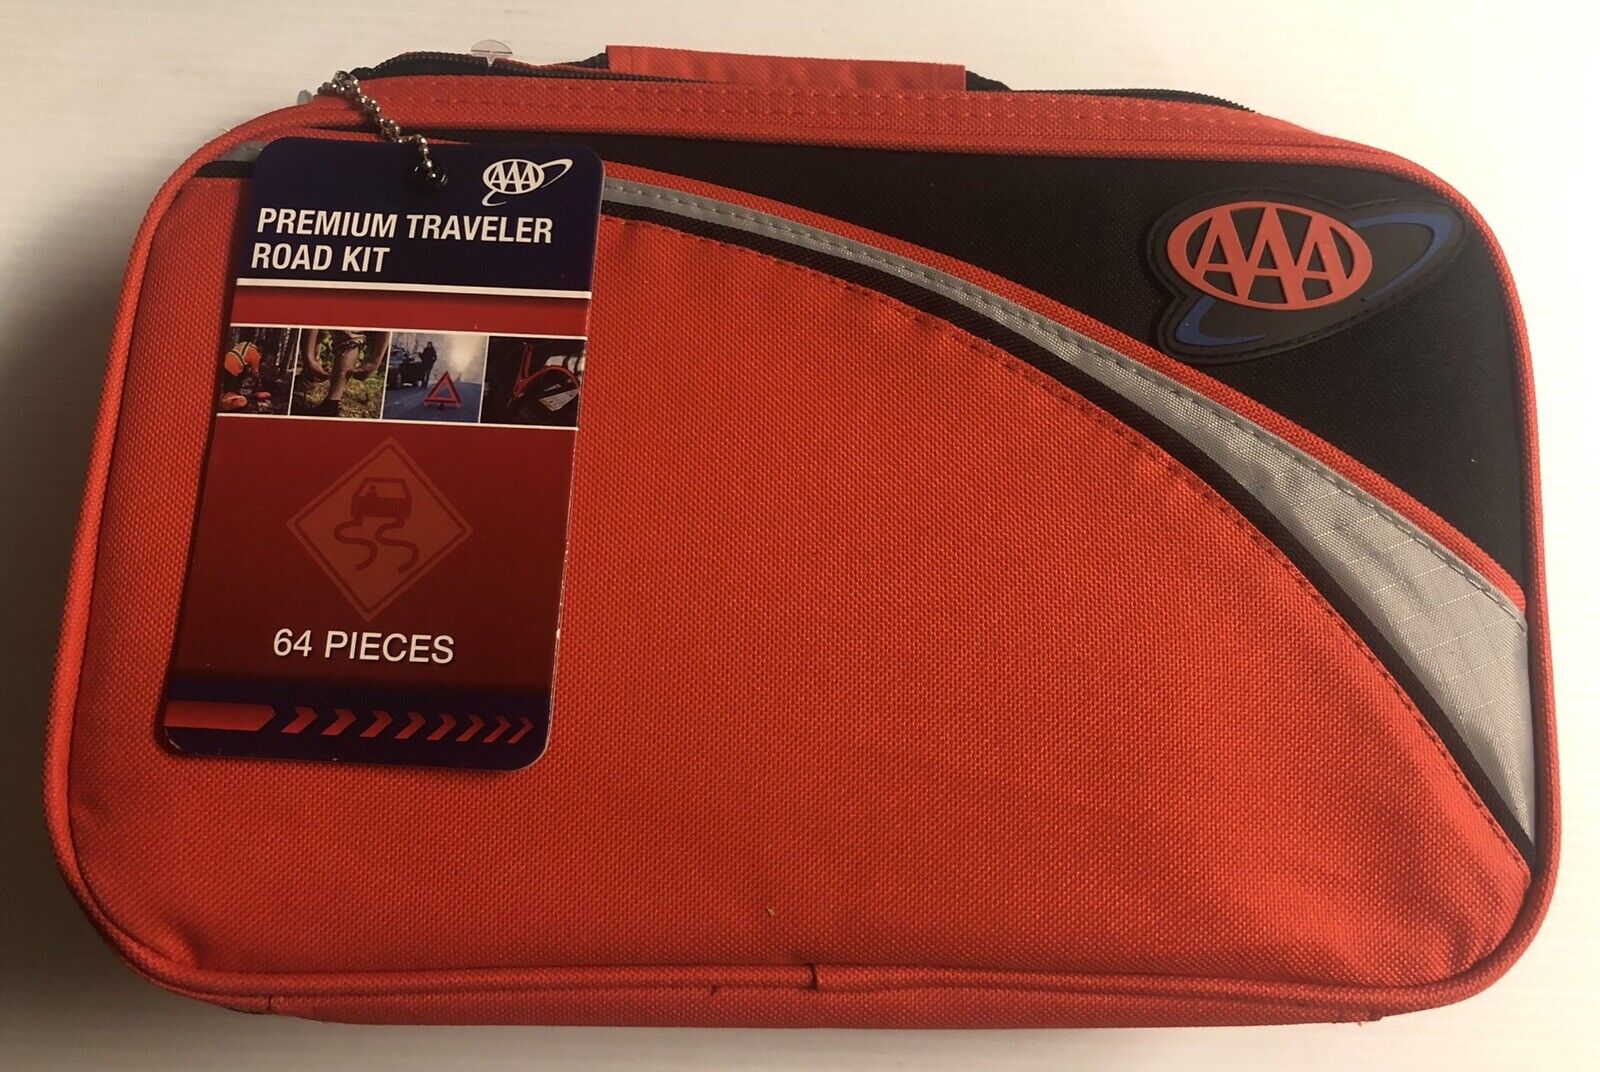 AAA Premium Traveler Road Kit Model  4284AAA, 64 Pieces